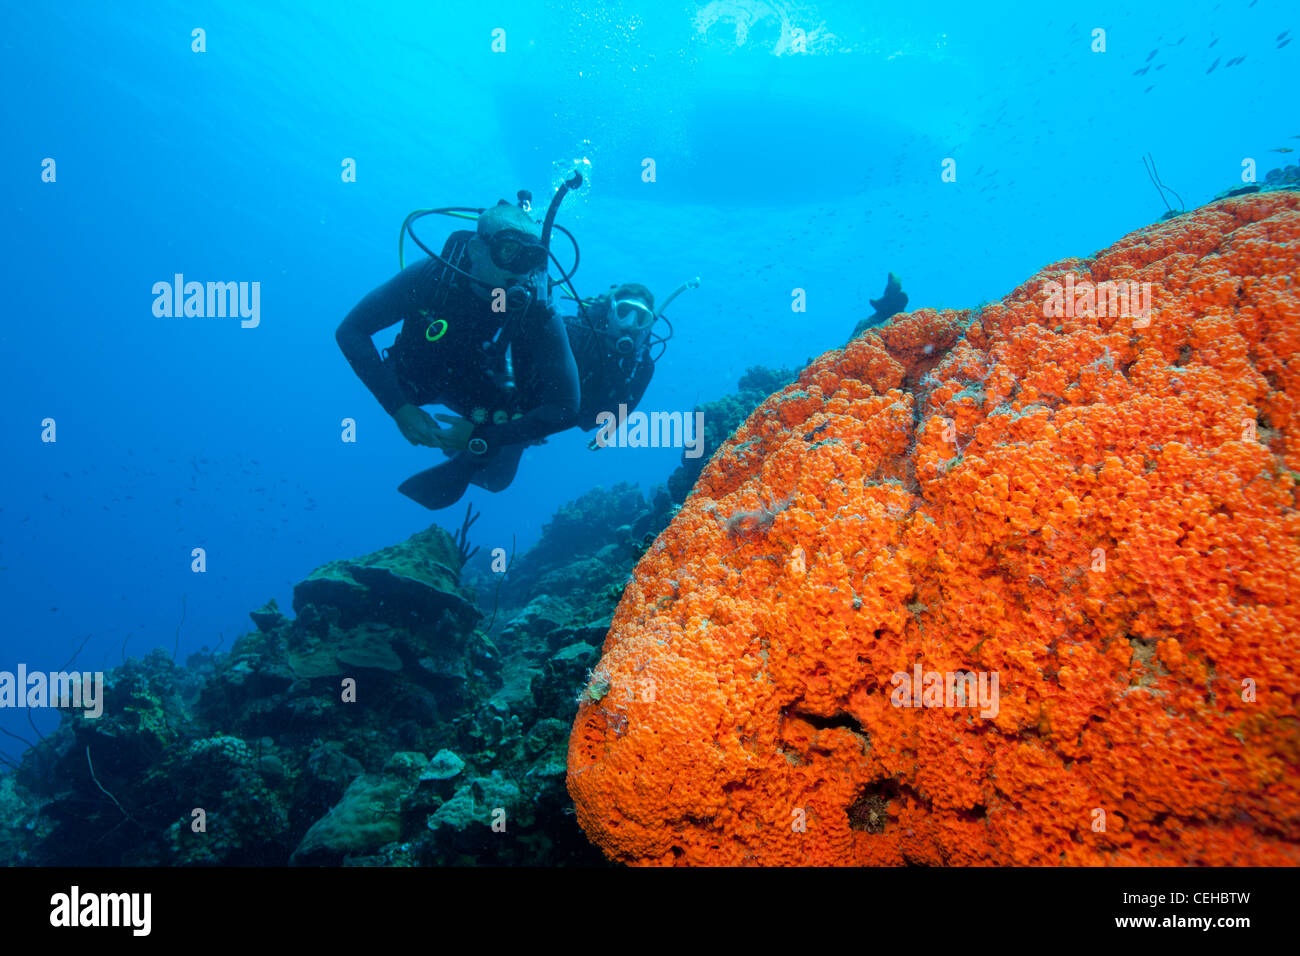 Scuba divers near Orange sponge Stock Photo